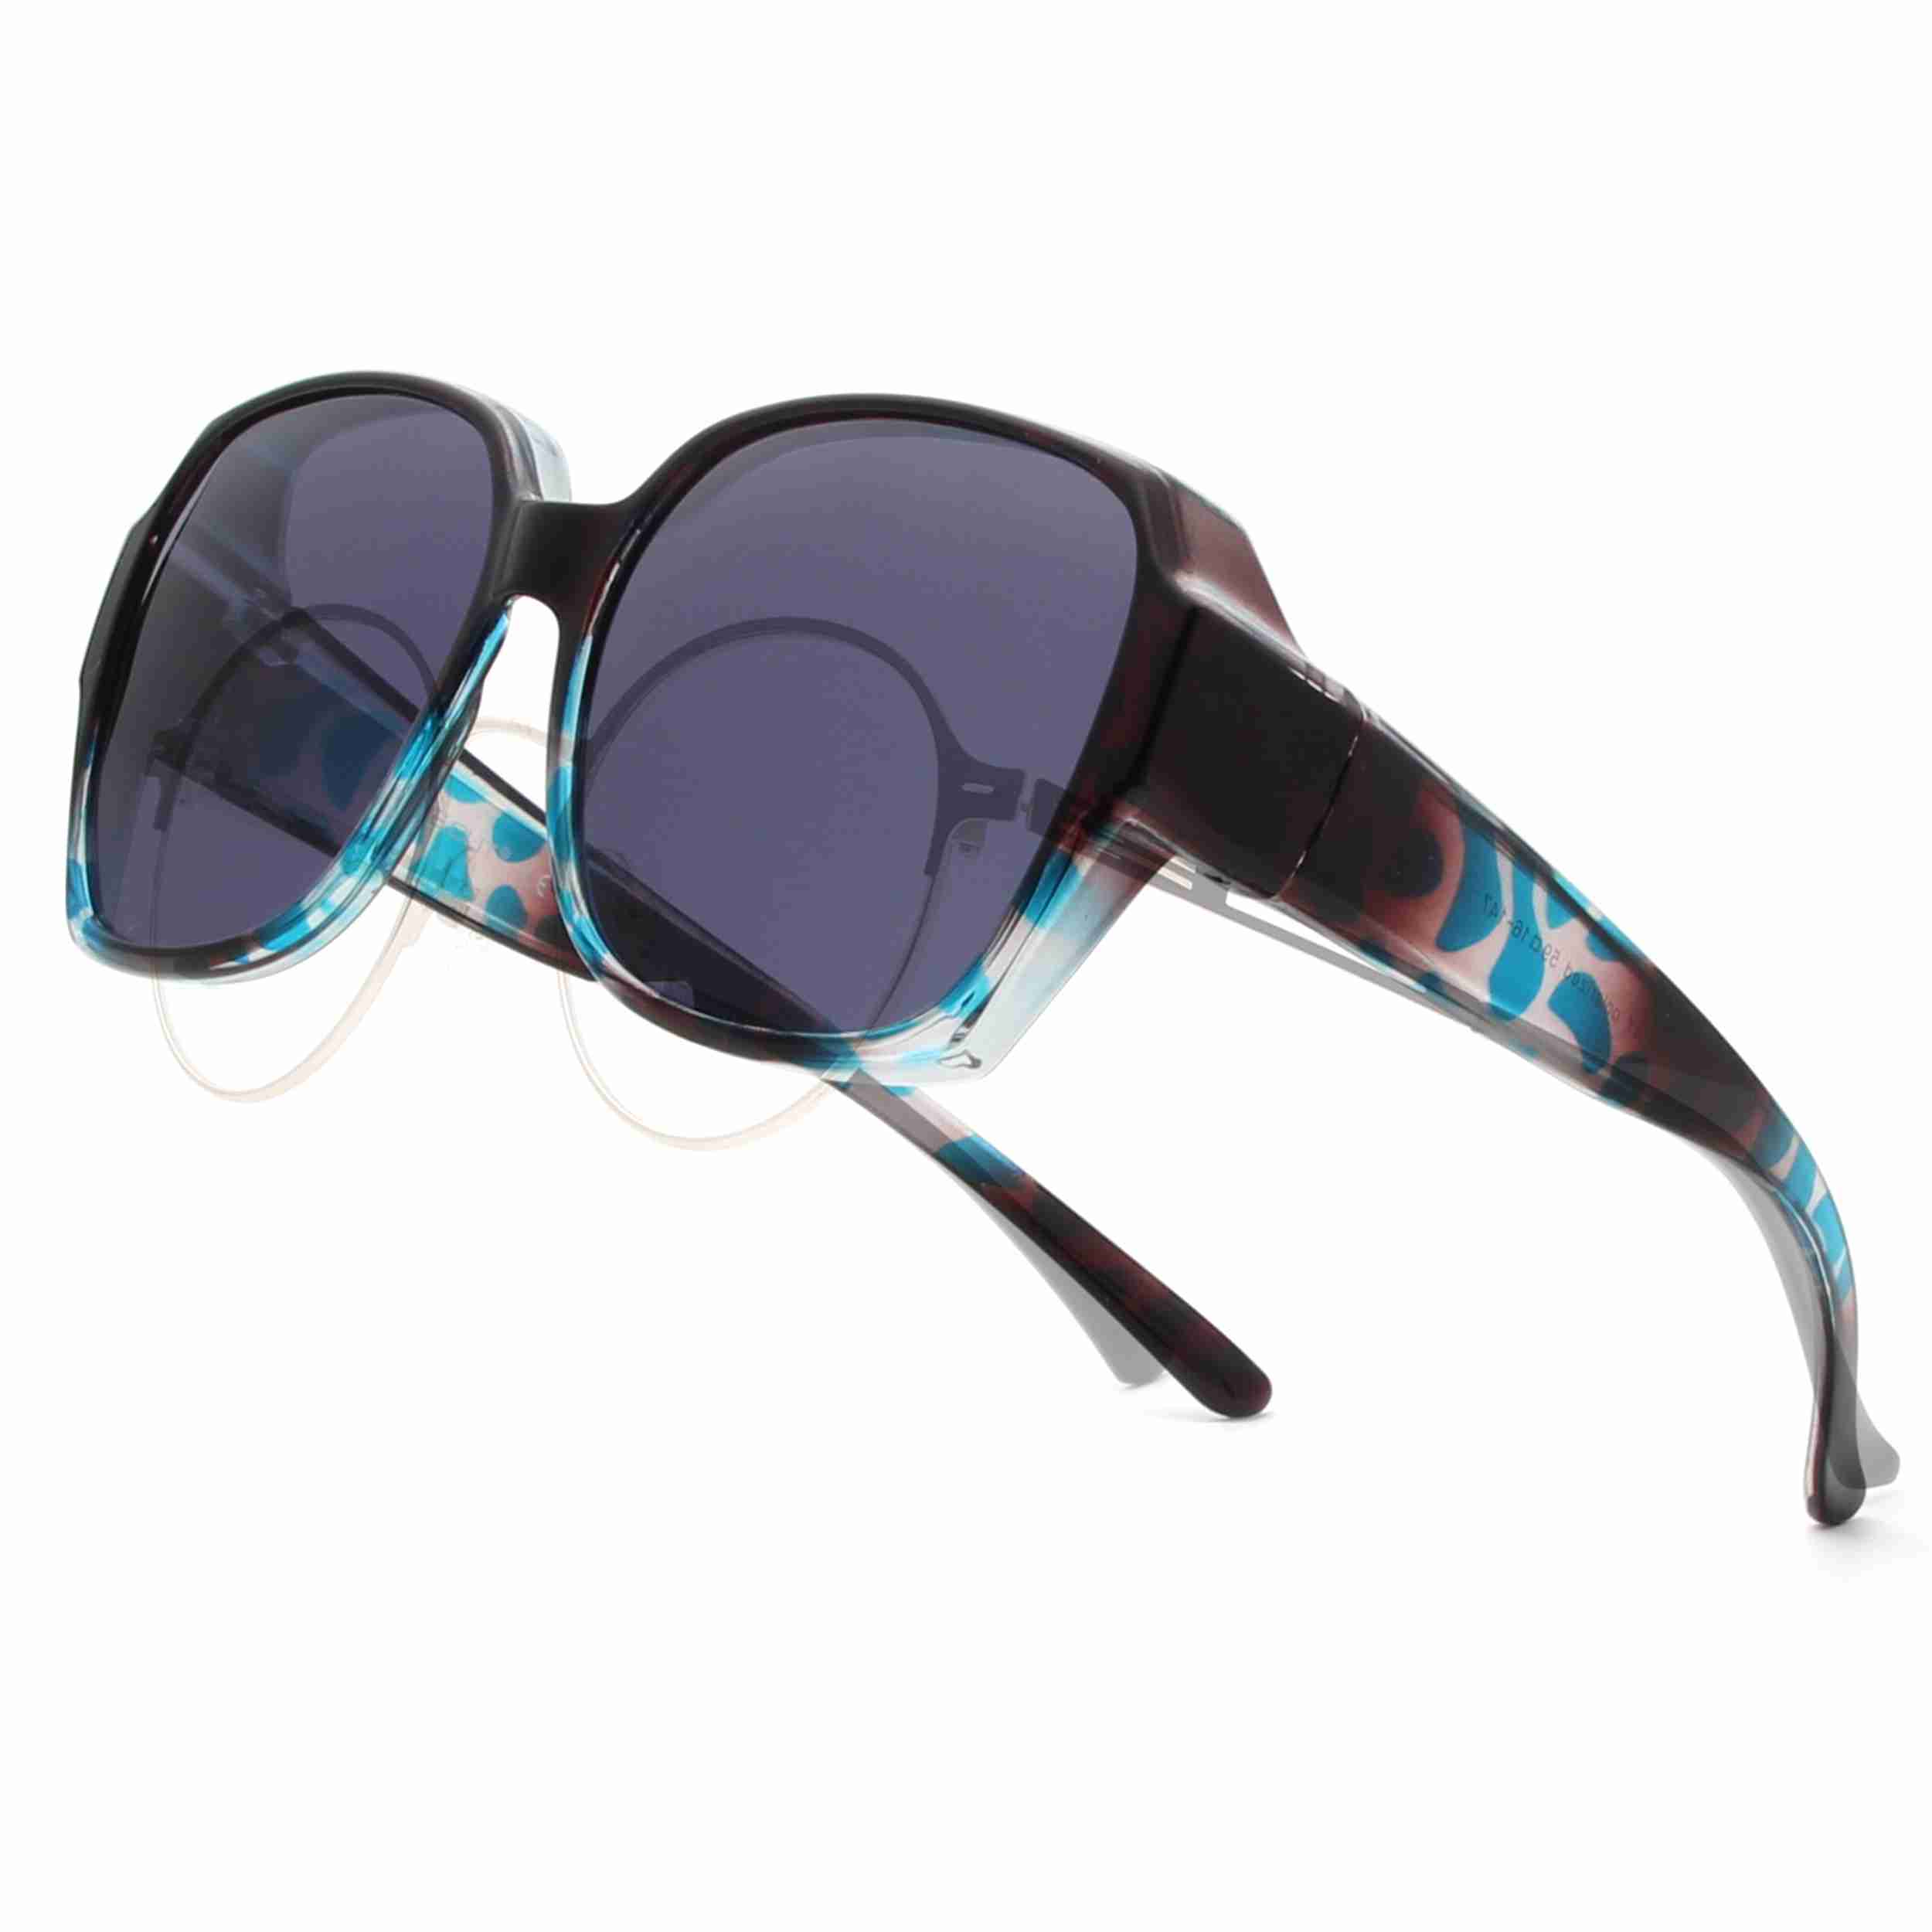 solar-shield-sunglasses with cash back rebate